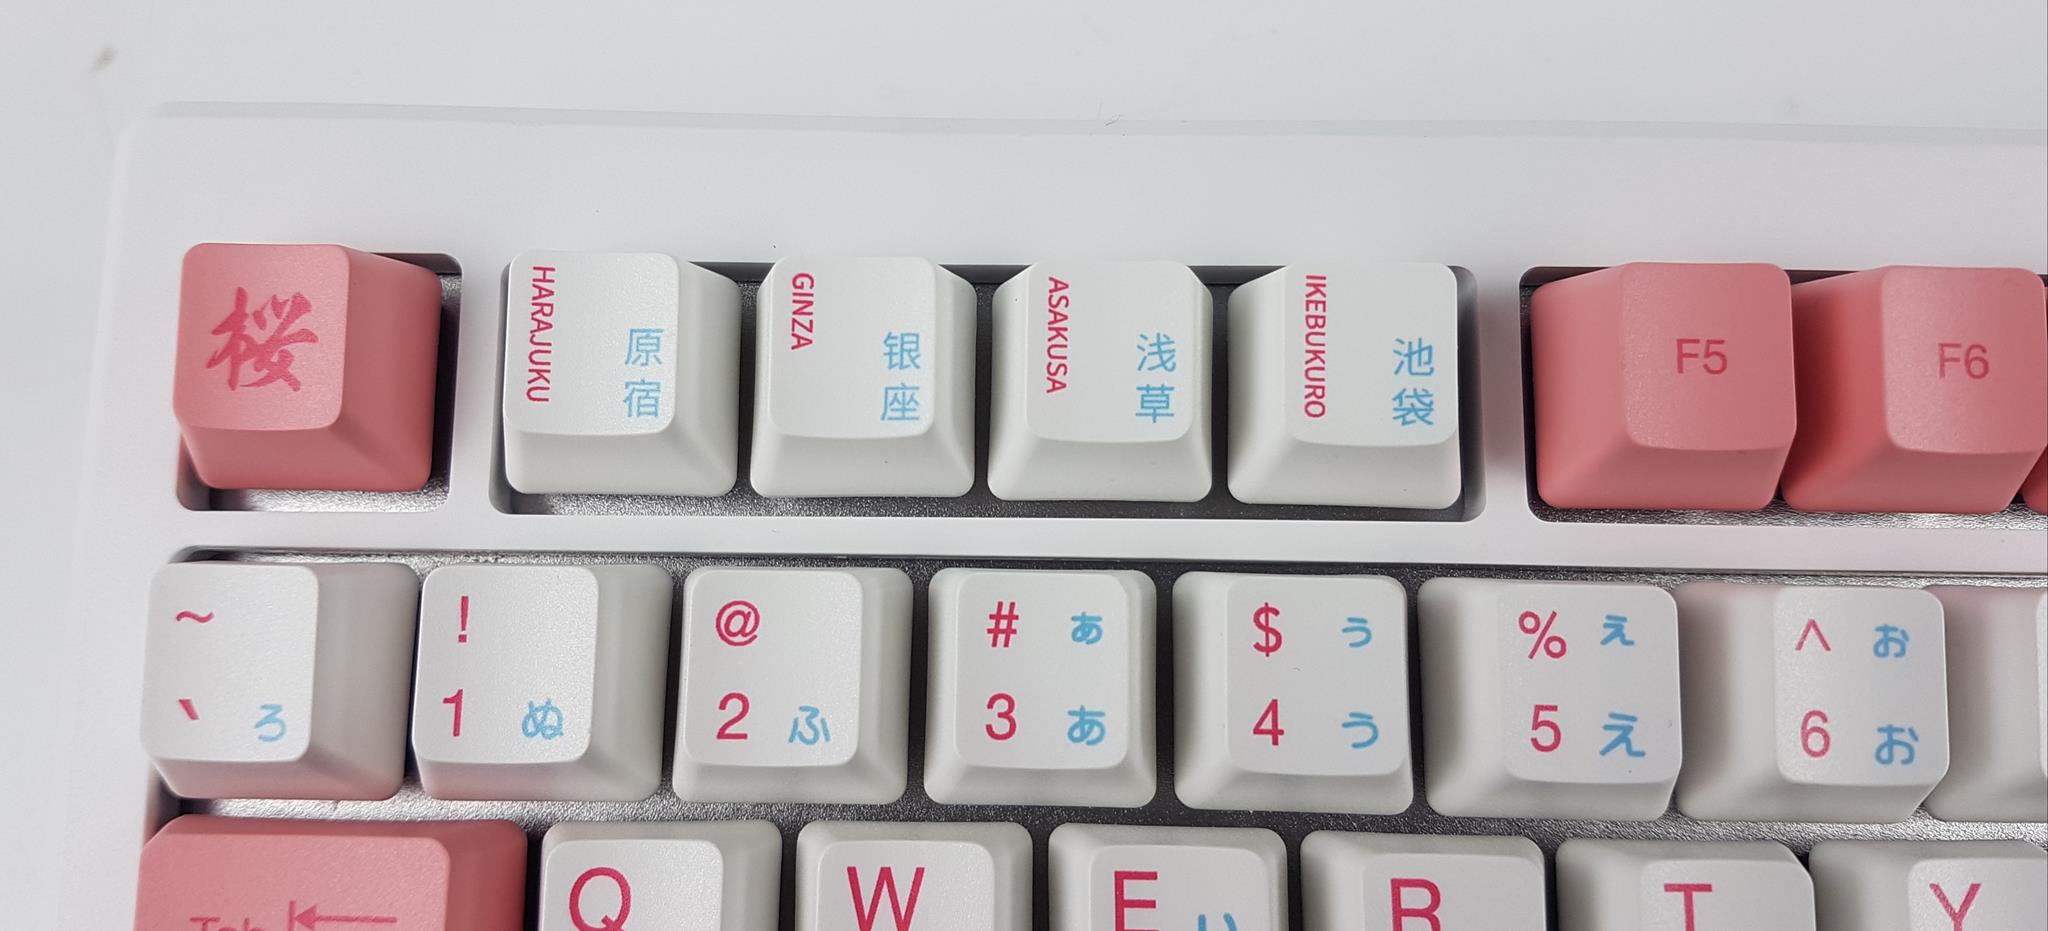 AKKO MOD007B PC HE Tokyo Keyboard Top Keys 1